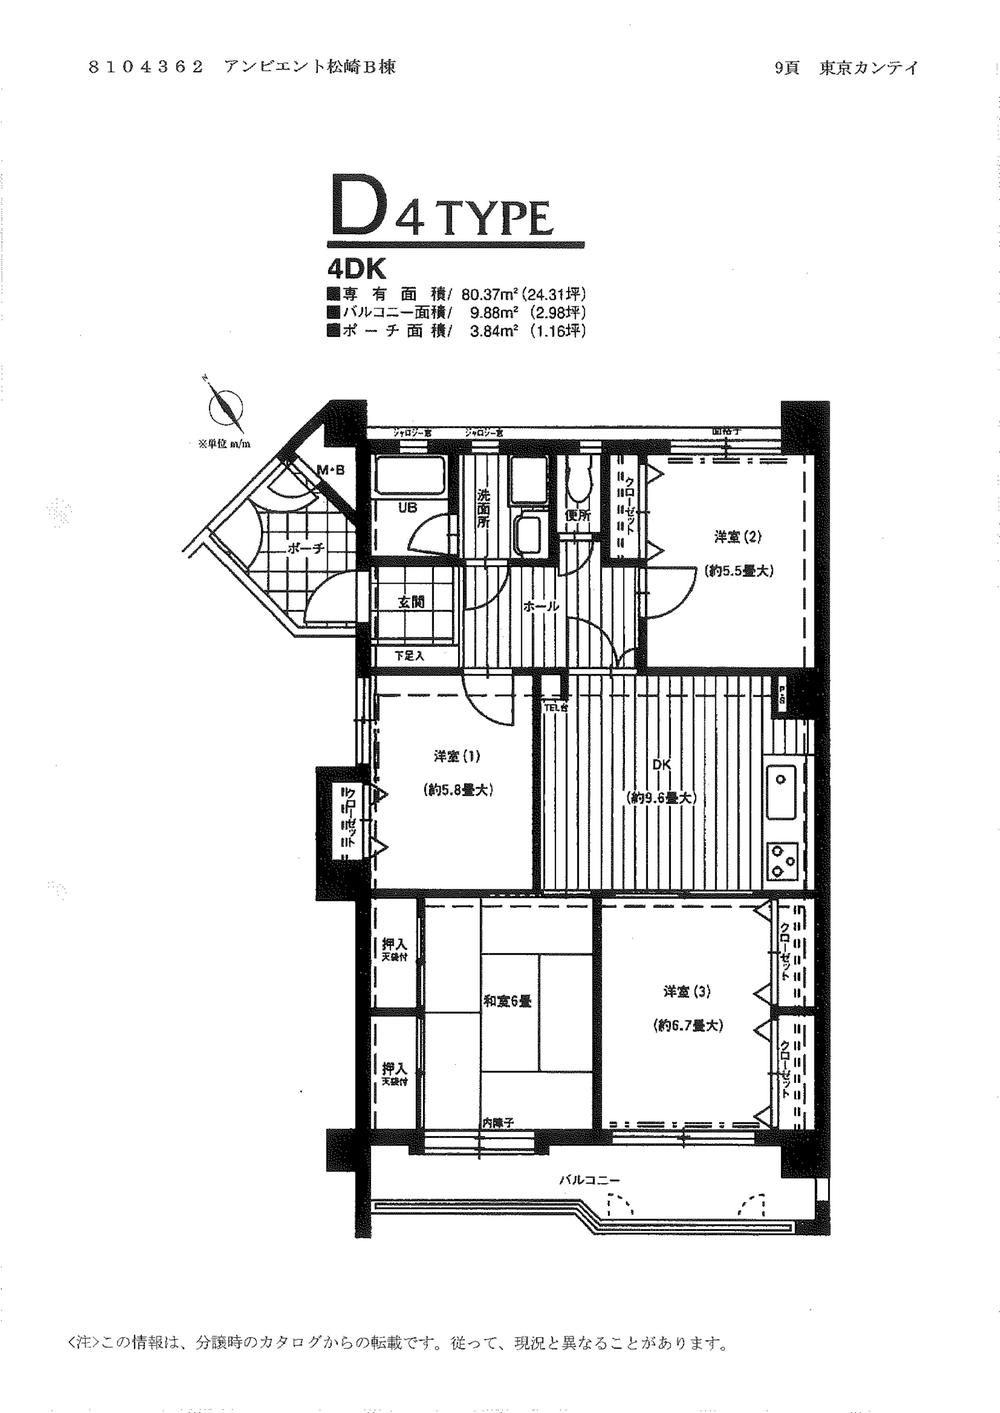 Floor plan. 4DK, Price 13.3 million yen, Occupied area 80.37 sq m , Balcony area 9.88 sq m